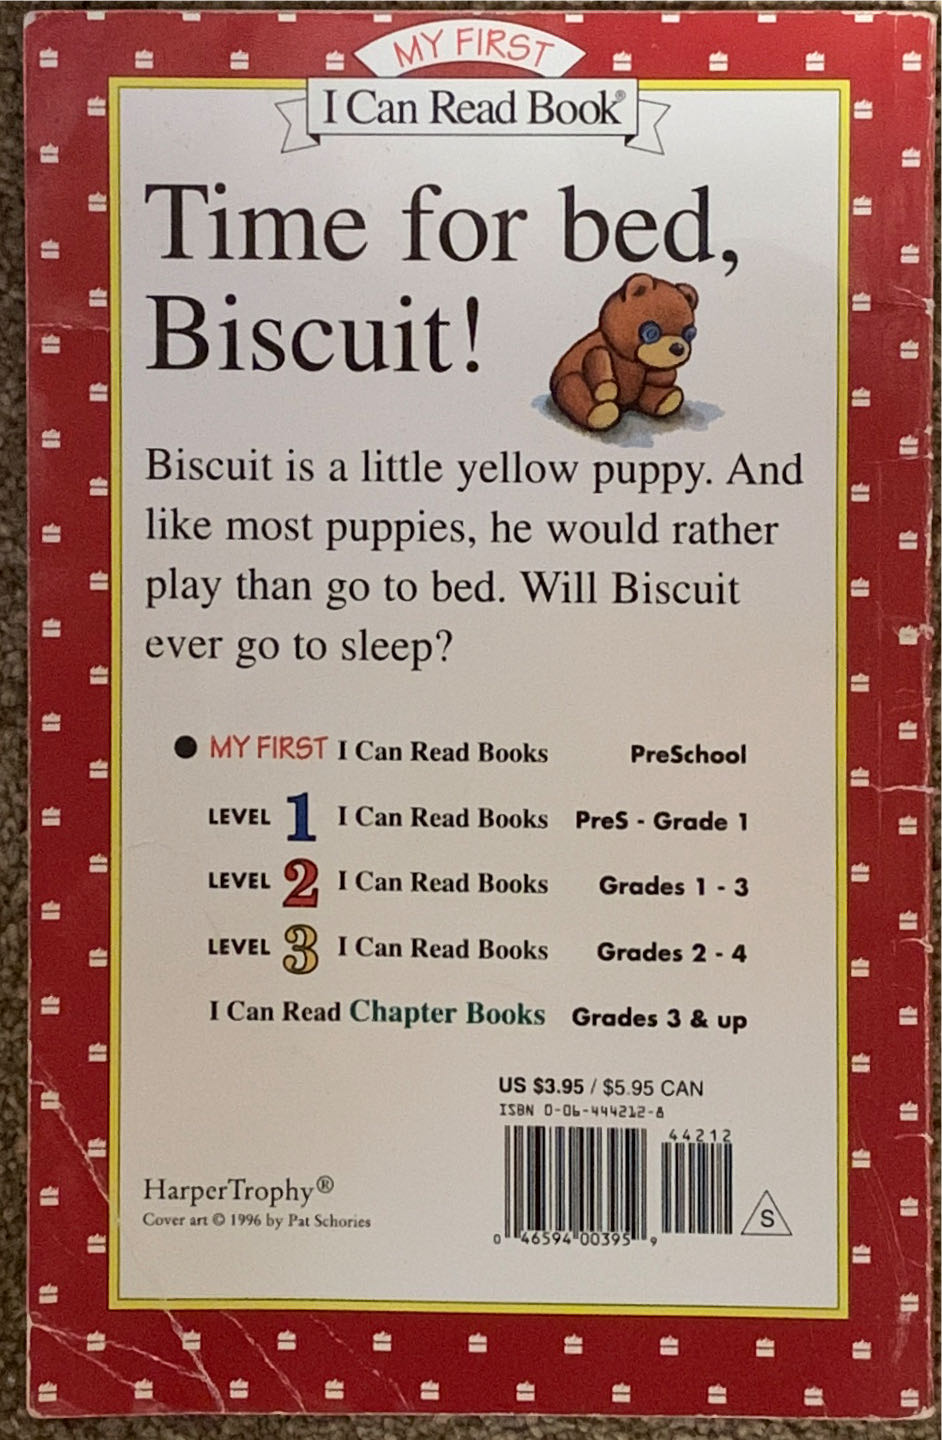 Biscuit - Alyssa Satin Capucilli (Harper Collins Publishers - Paperback) book collectible [Barcode 9780064442121] - Main Image 2